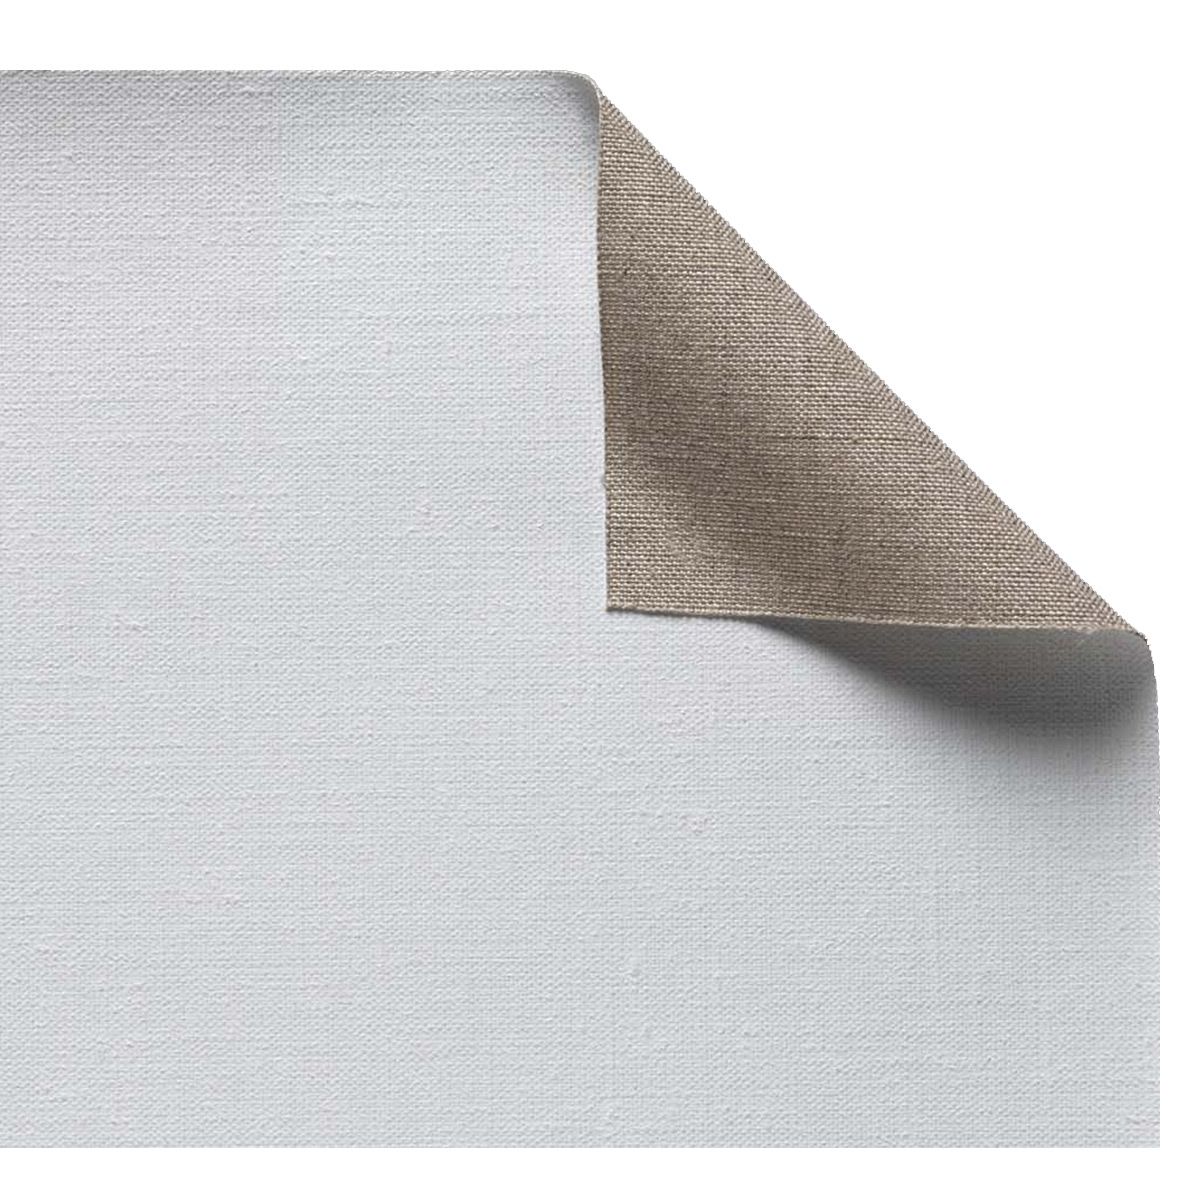 Primed Linen Roll #112 Moderately Fine Texture, Warp 20cm/16cm weft; weighs 12.17oz.